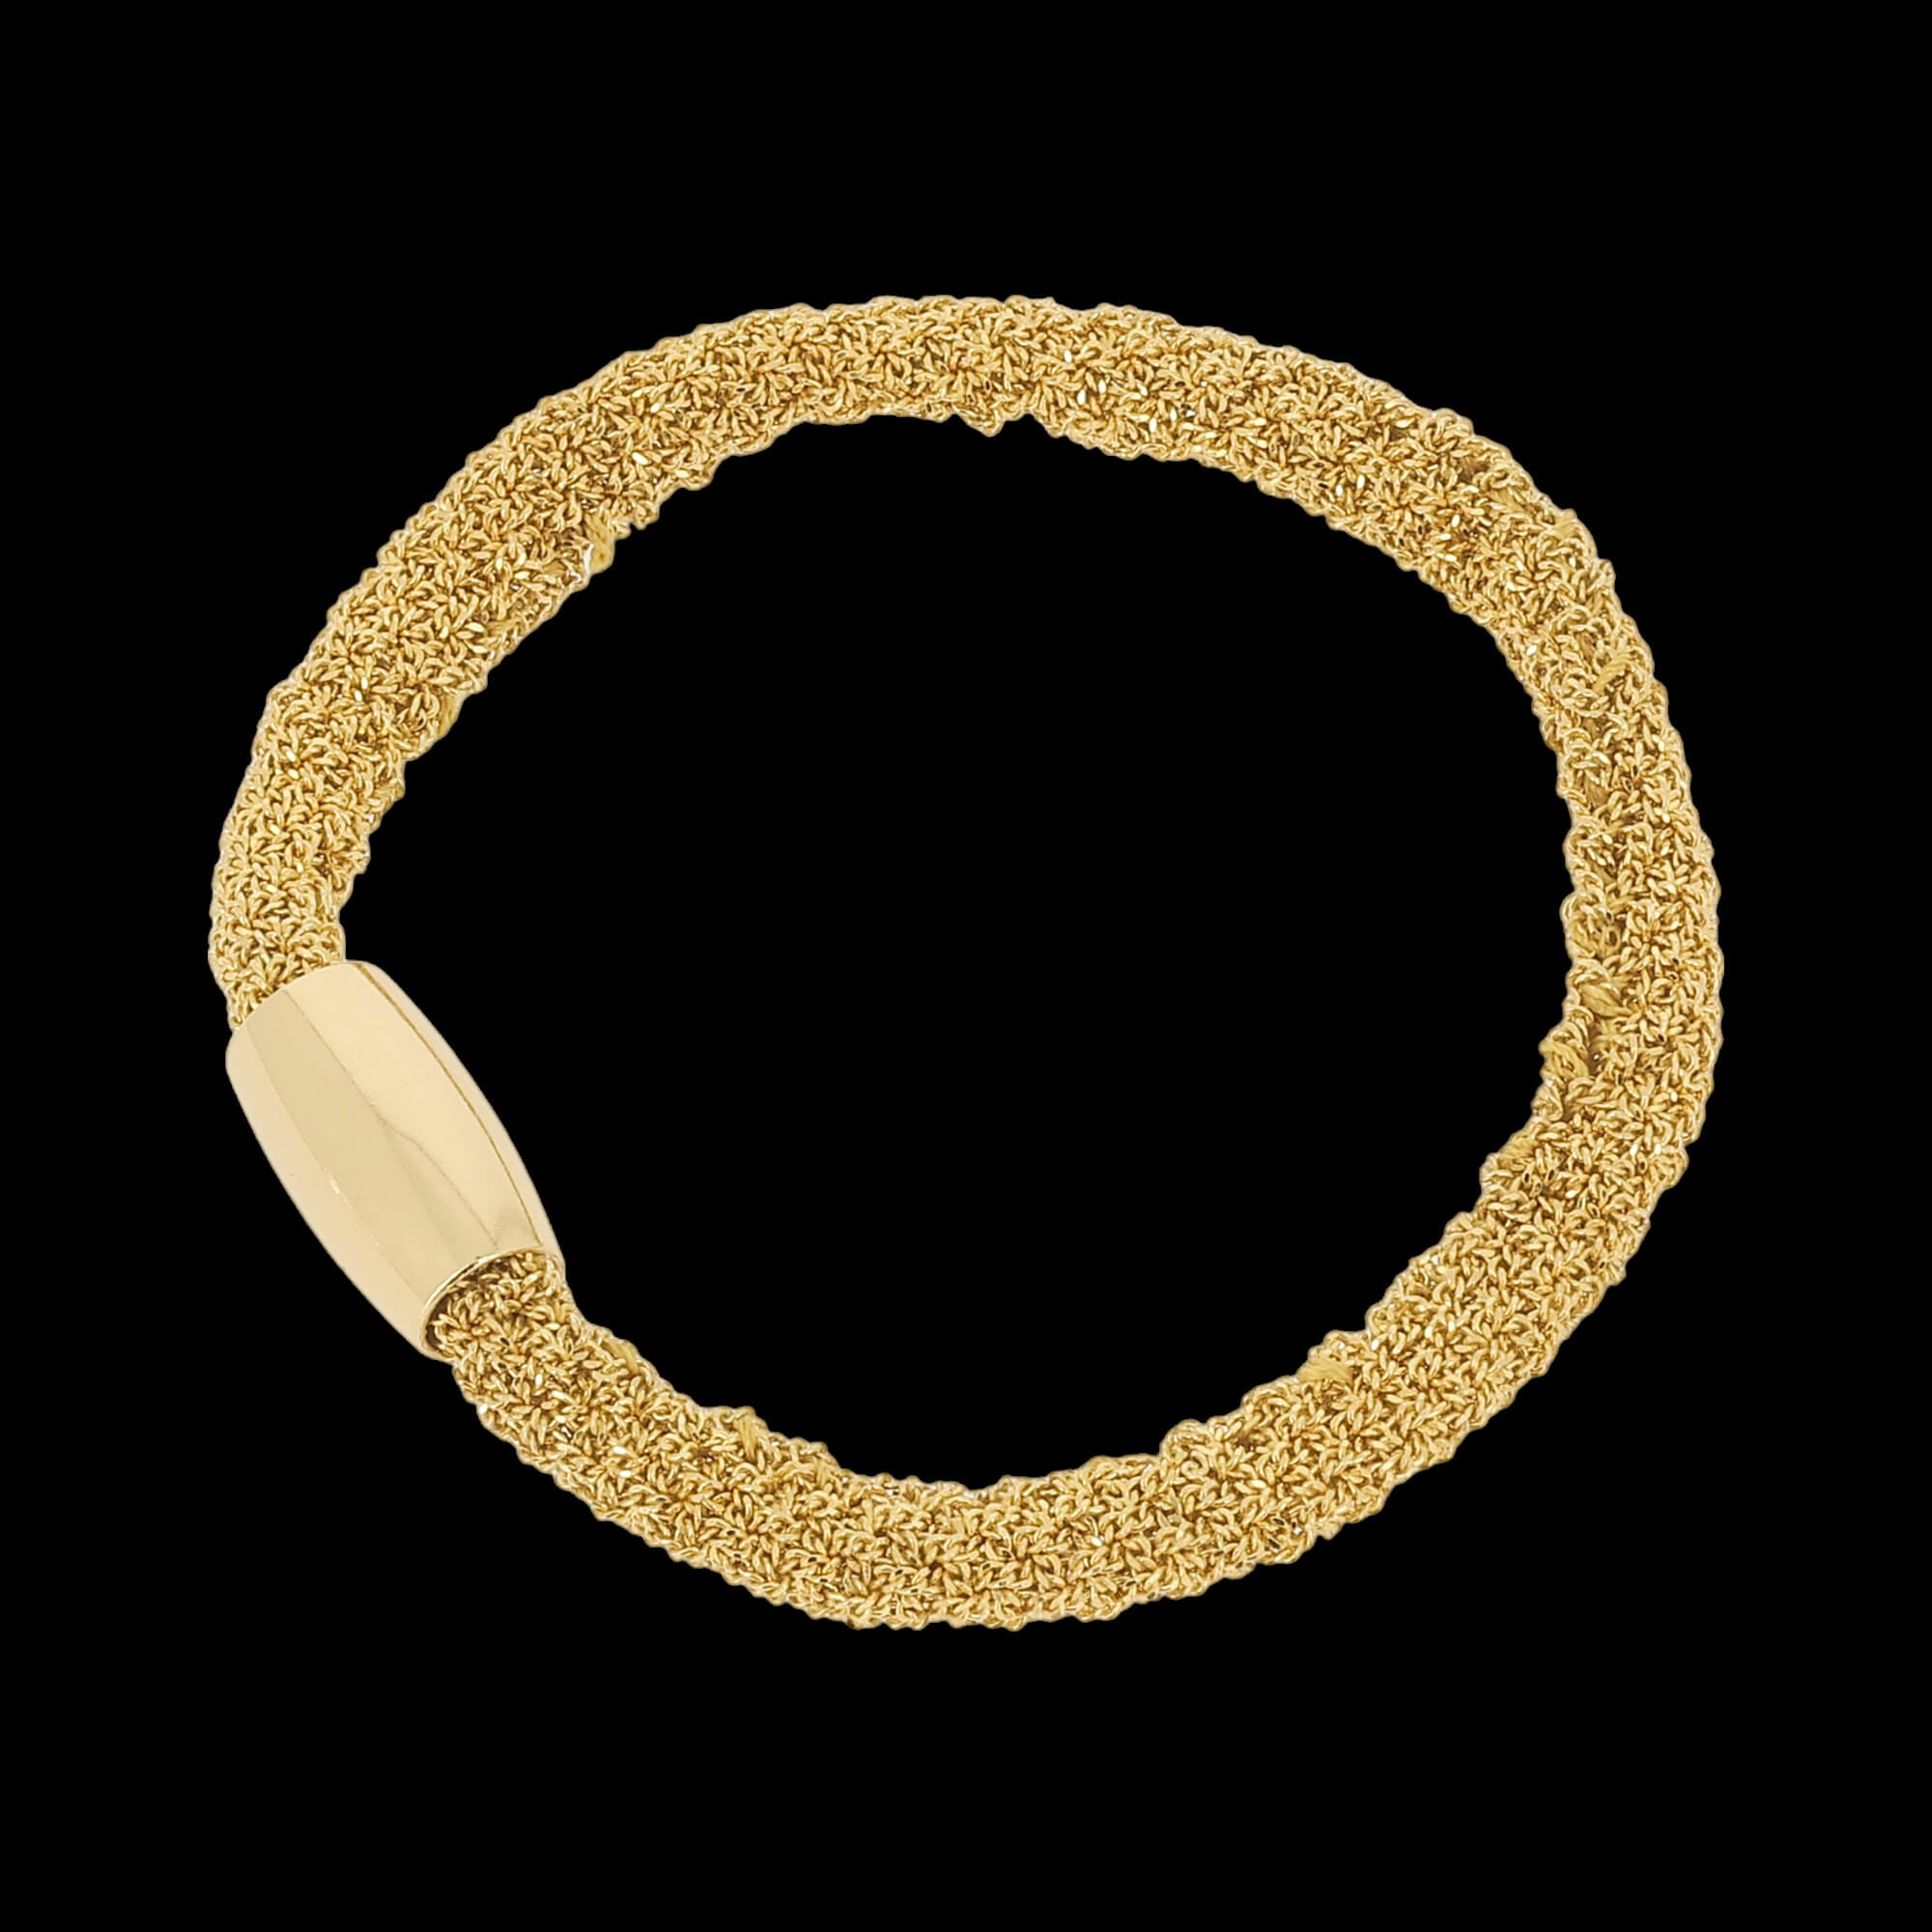 Narrow gold plated interwoven bracelet